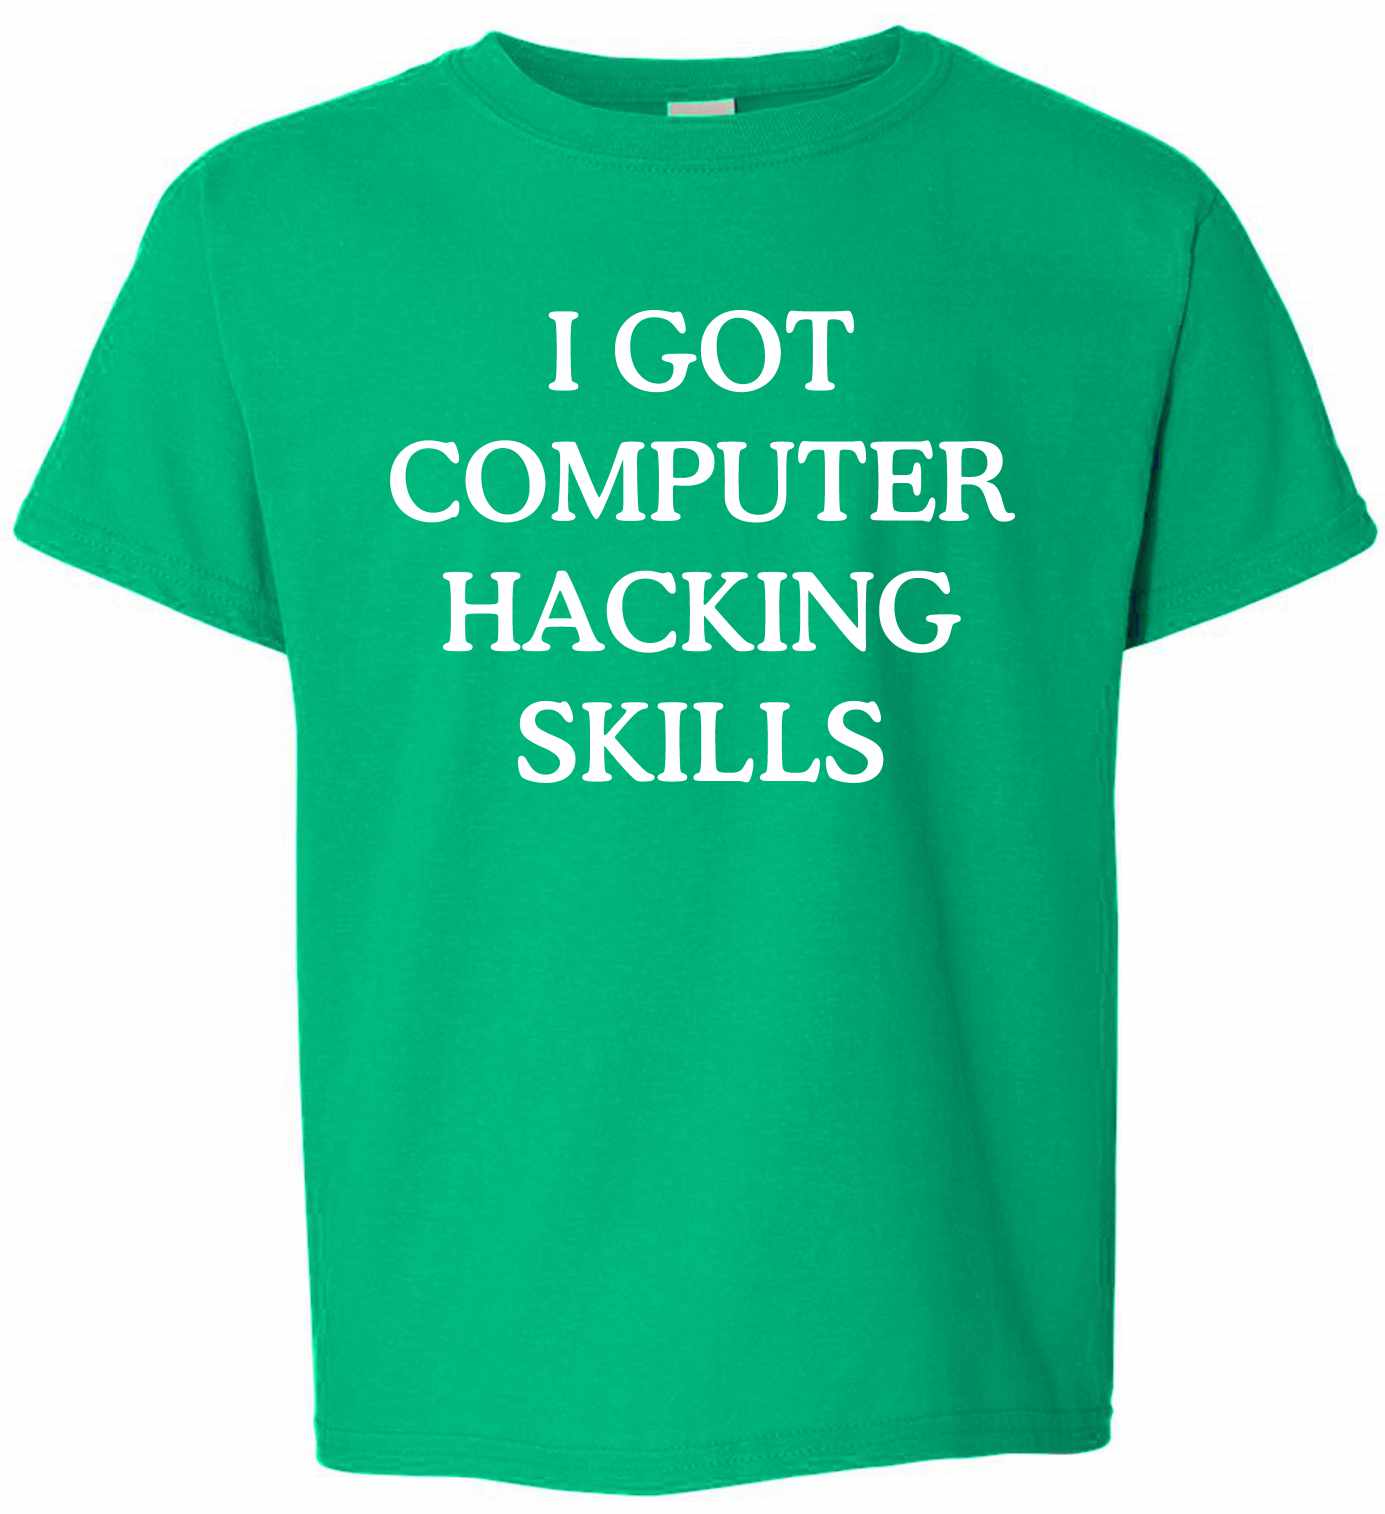 I GOT COMPUTER HACKING SKILLS on Kids T-Shirt (#382-201)